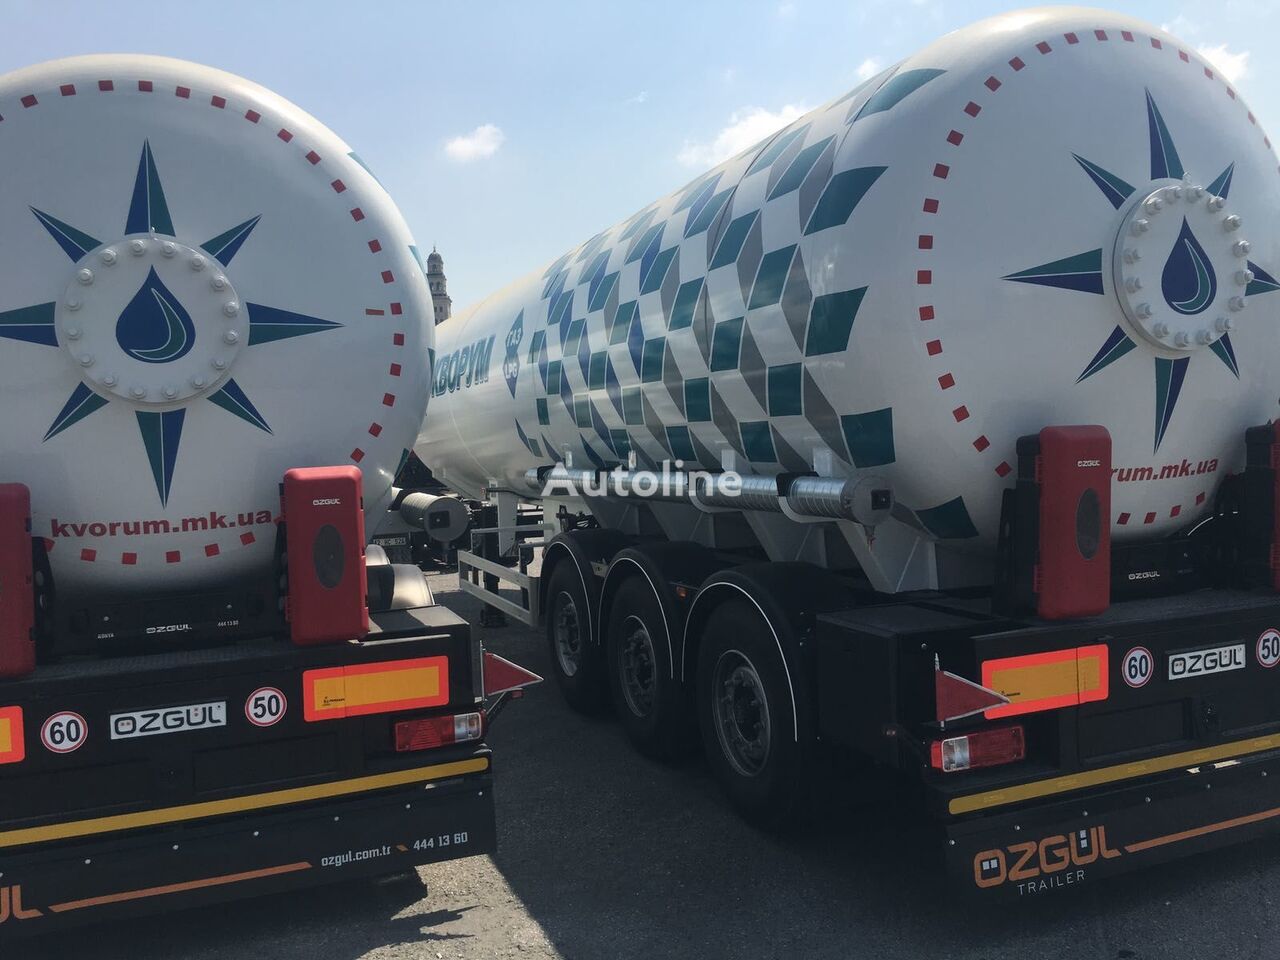 new Özgül gas tank trailer